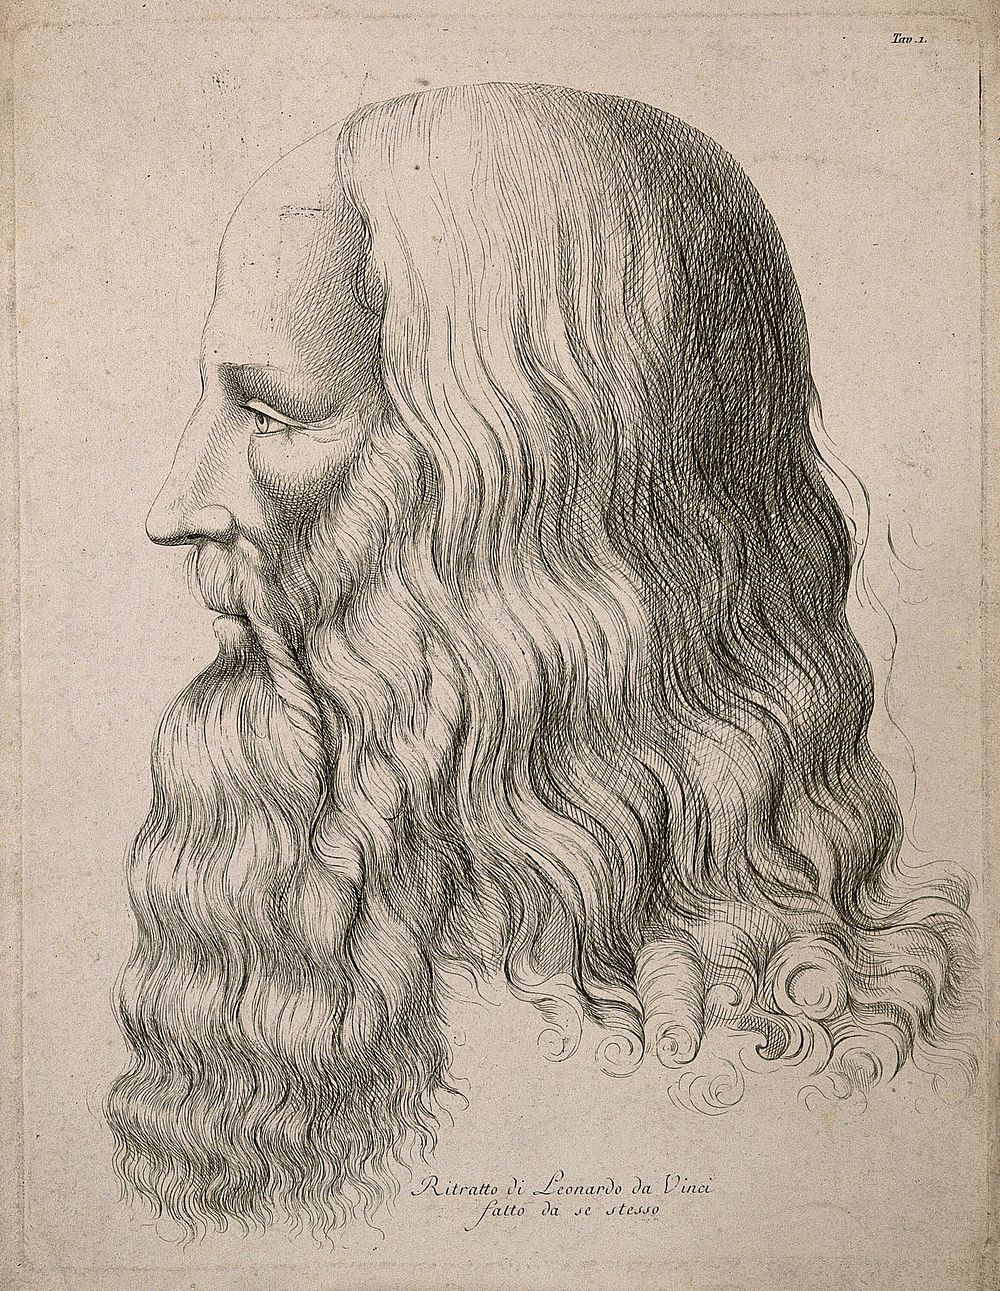 Leonardo da Vinci. Etching after C. G. Gerli, 1784, after Leonardo da Vinci.